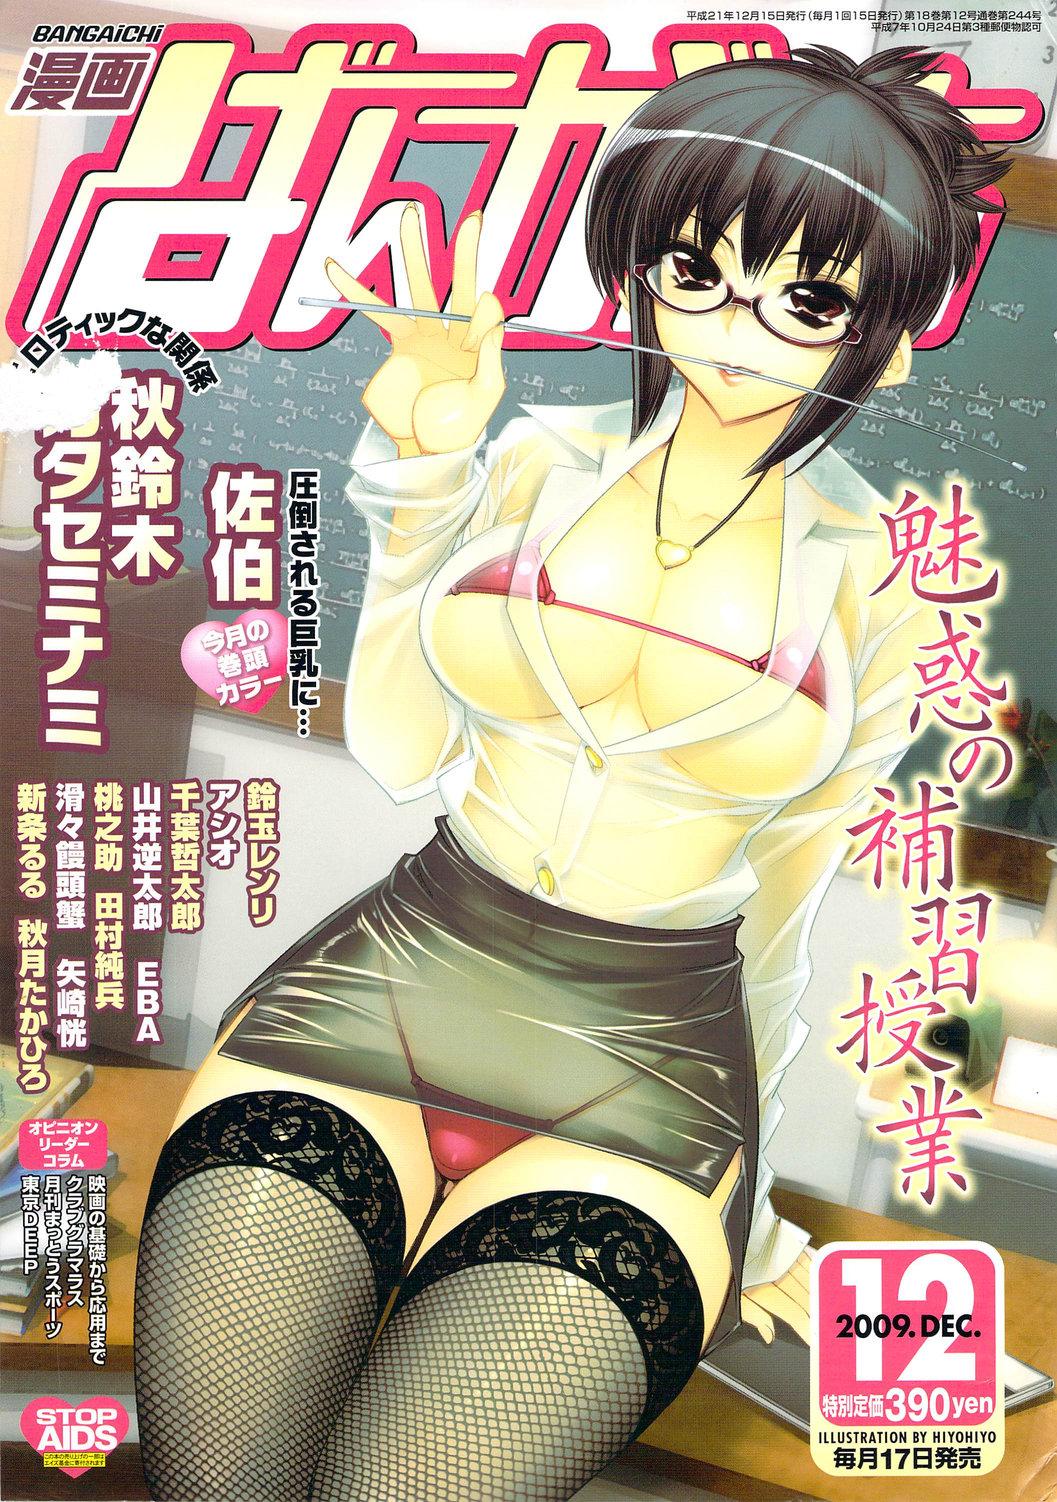 Manga Bangaichi 2009-12 0